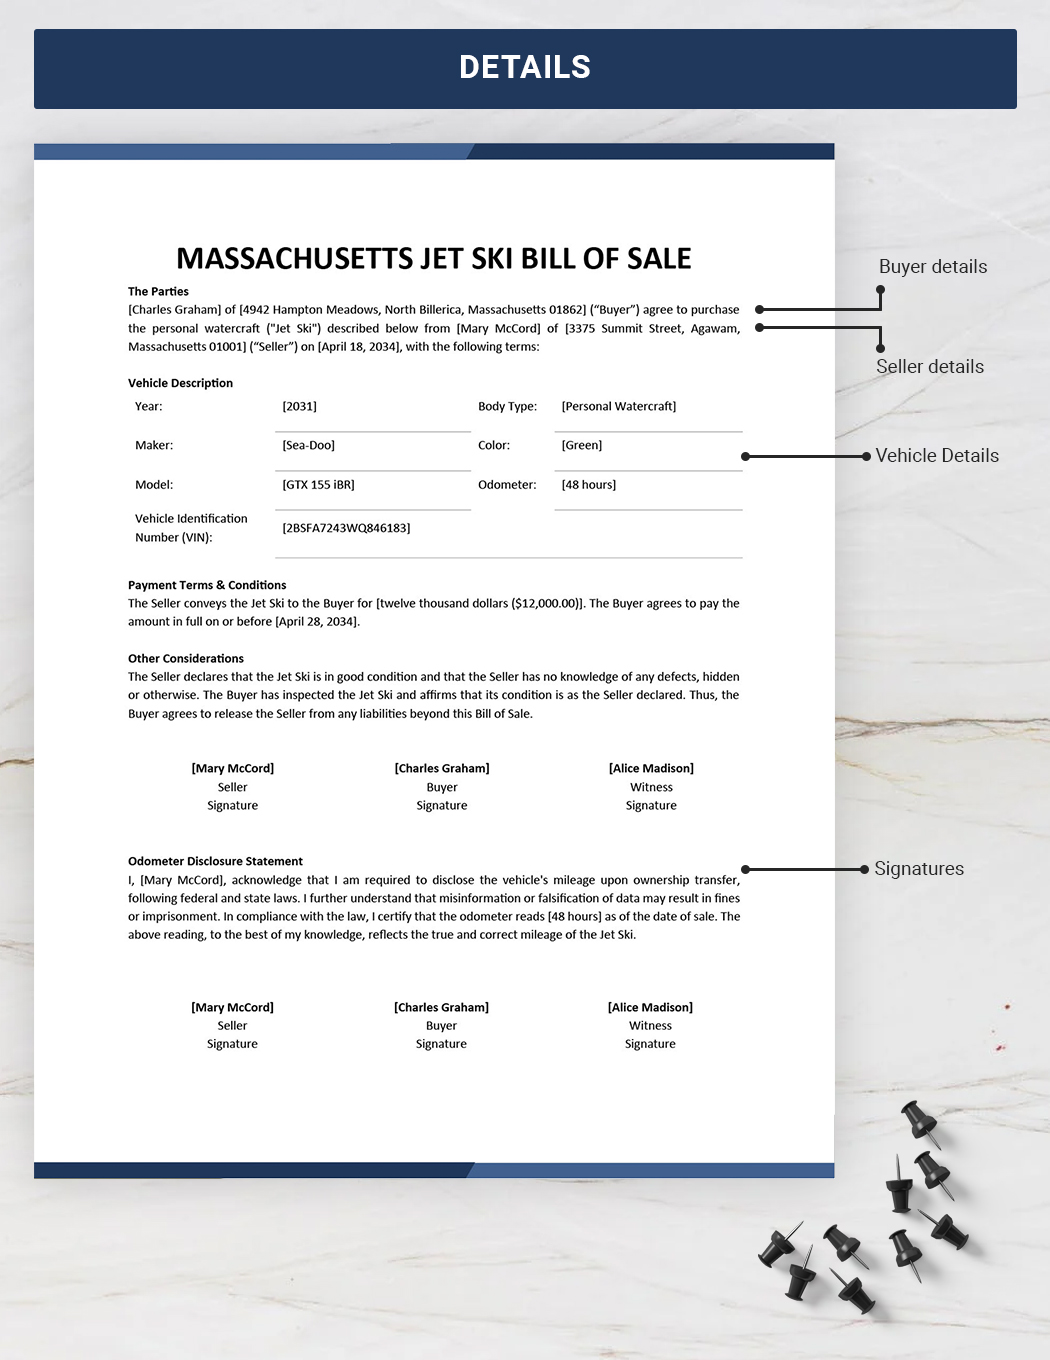 Massachusetts Jet Ski Bill of Sale Template